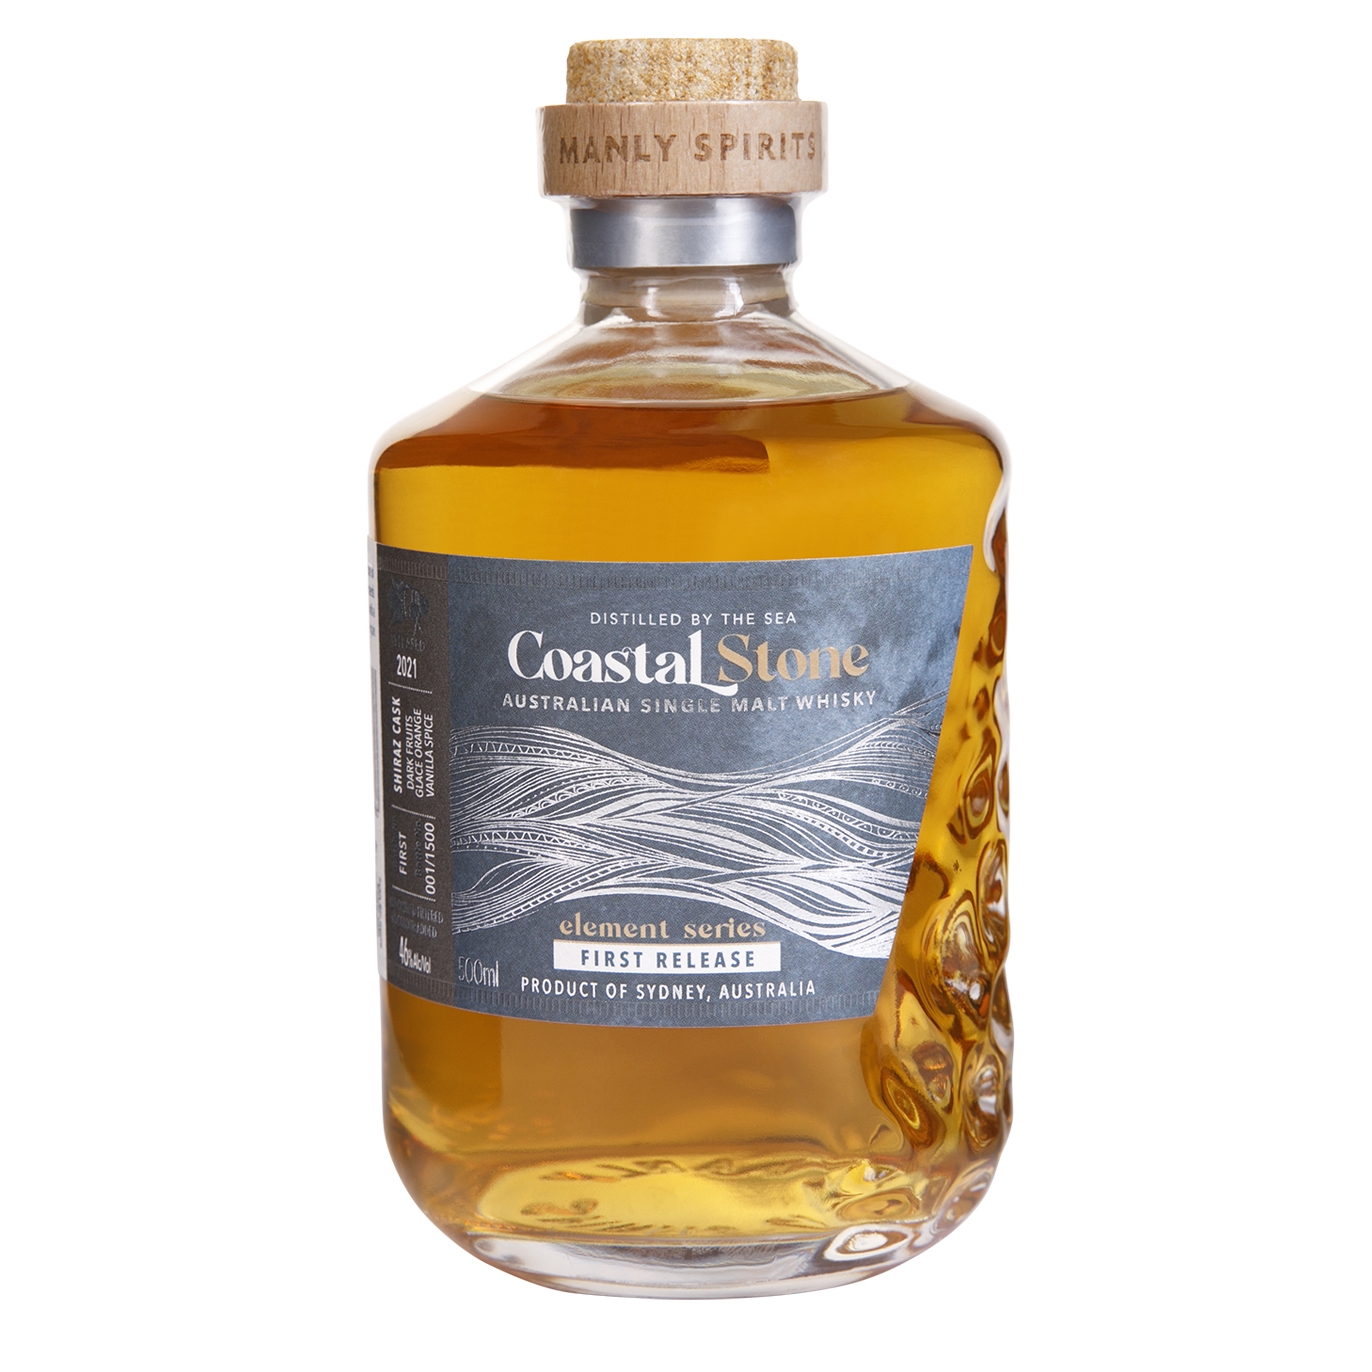 Manly Spirits Coastal Stone Element Series Shiraz Cask Single Malt Australian Whisky 500ml